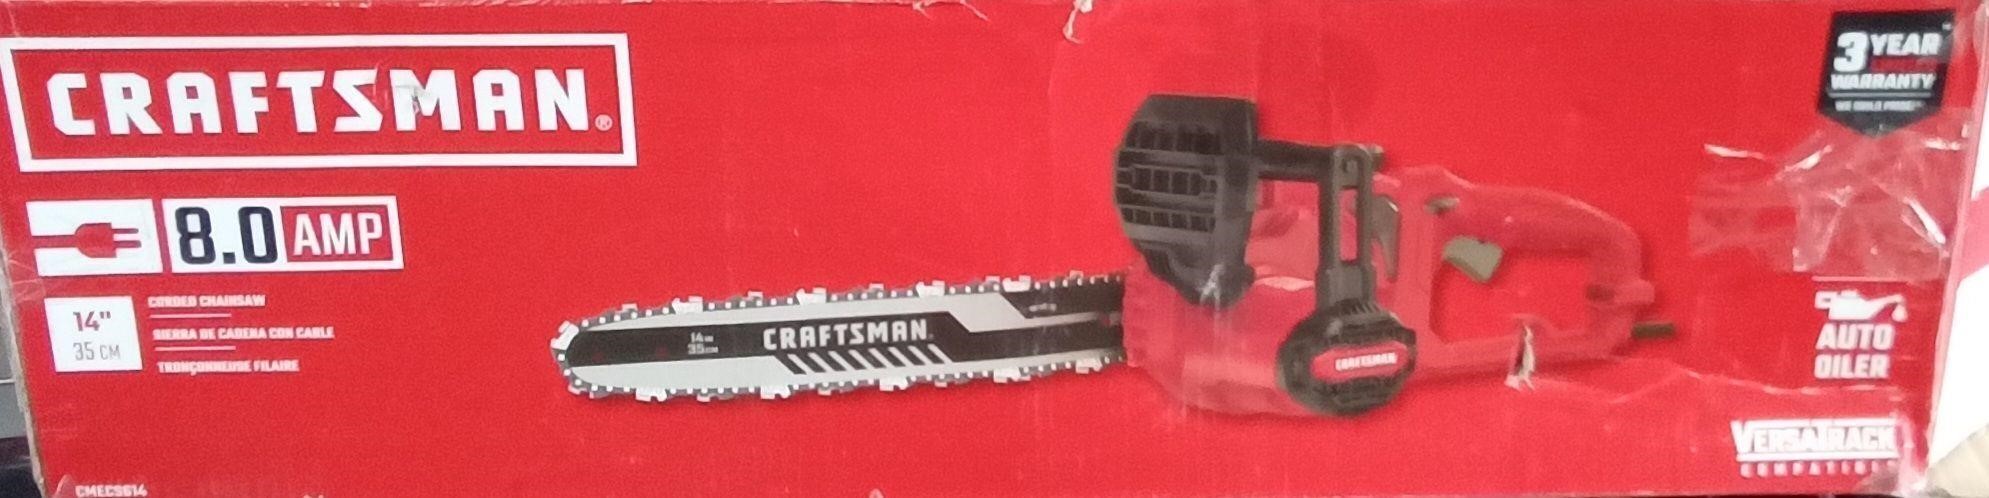 Craftsman 8amp 14" Chainsaw